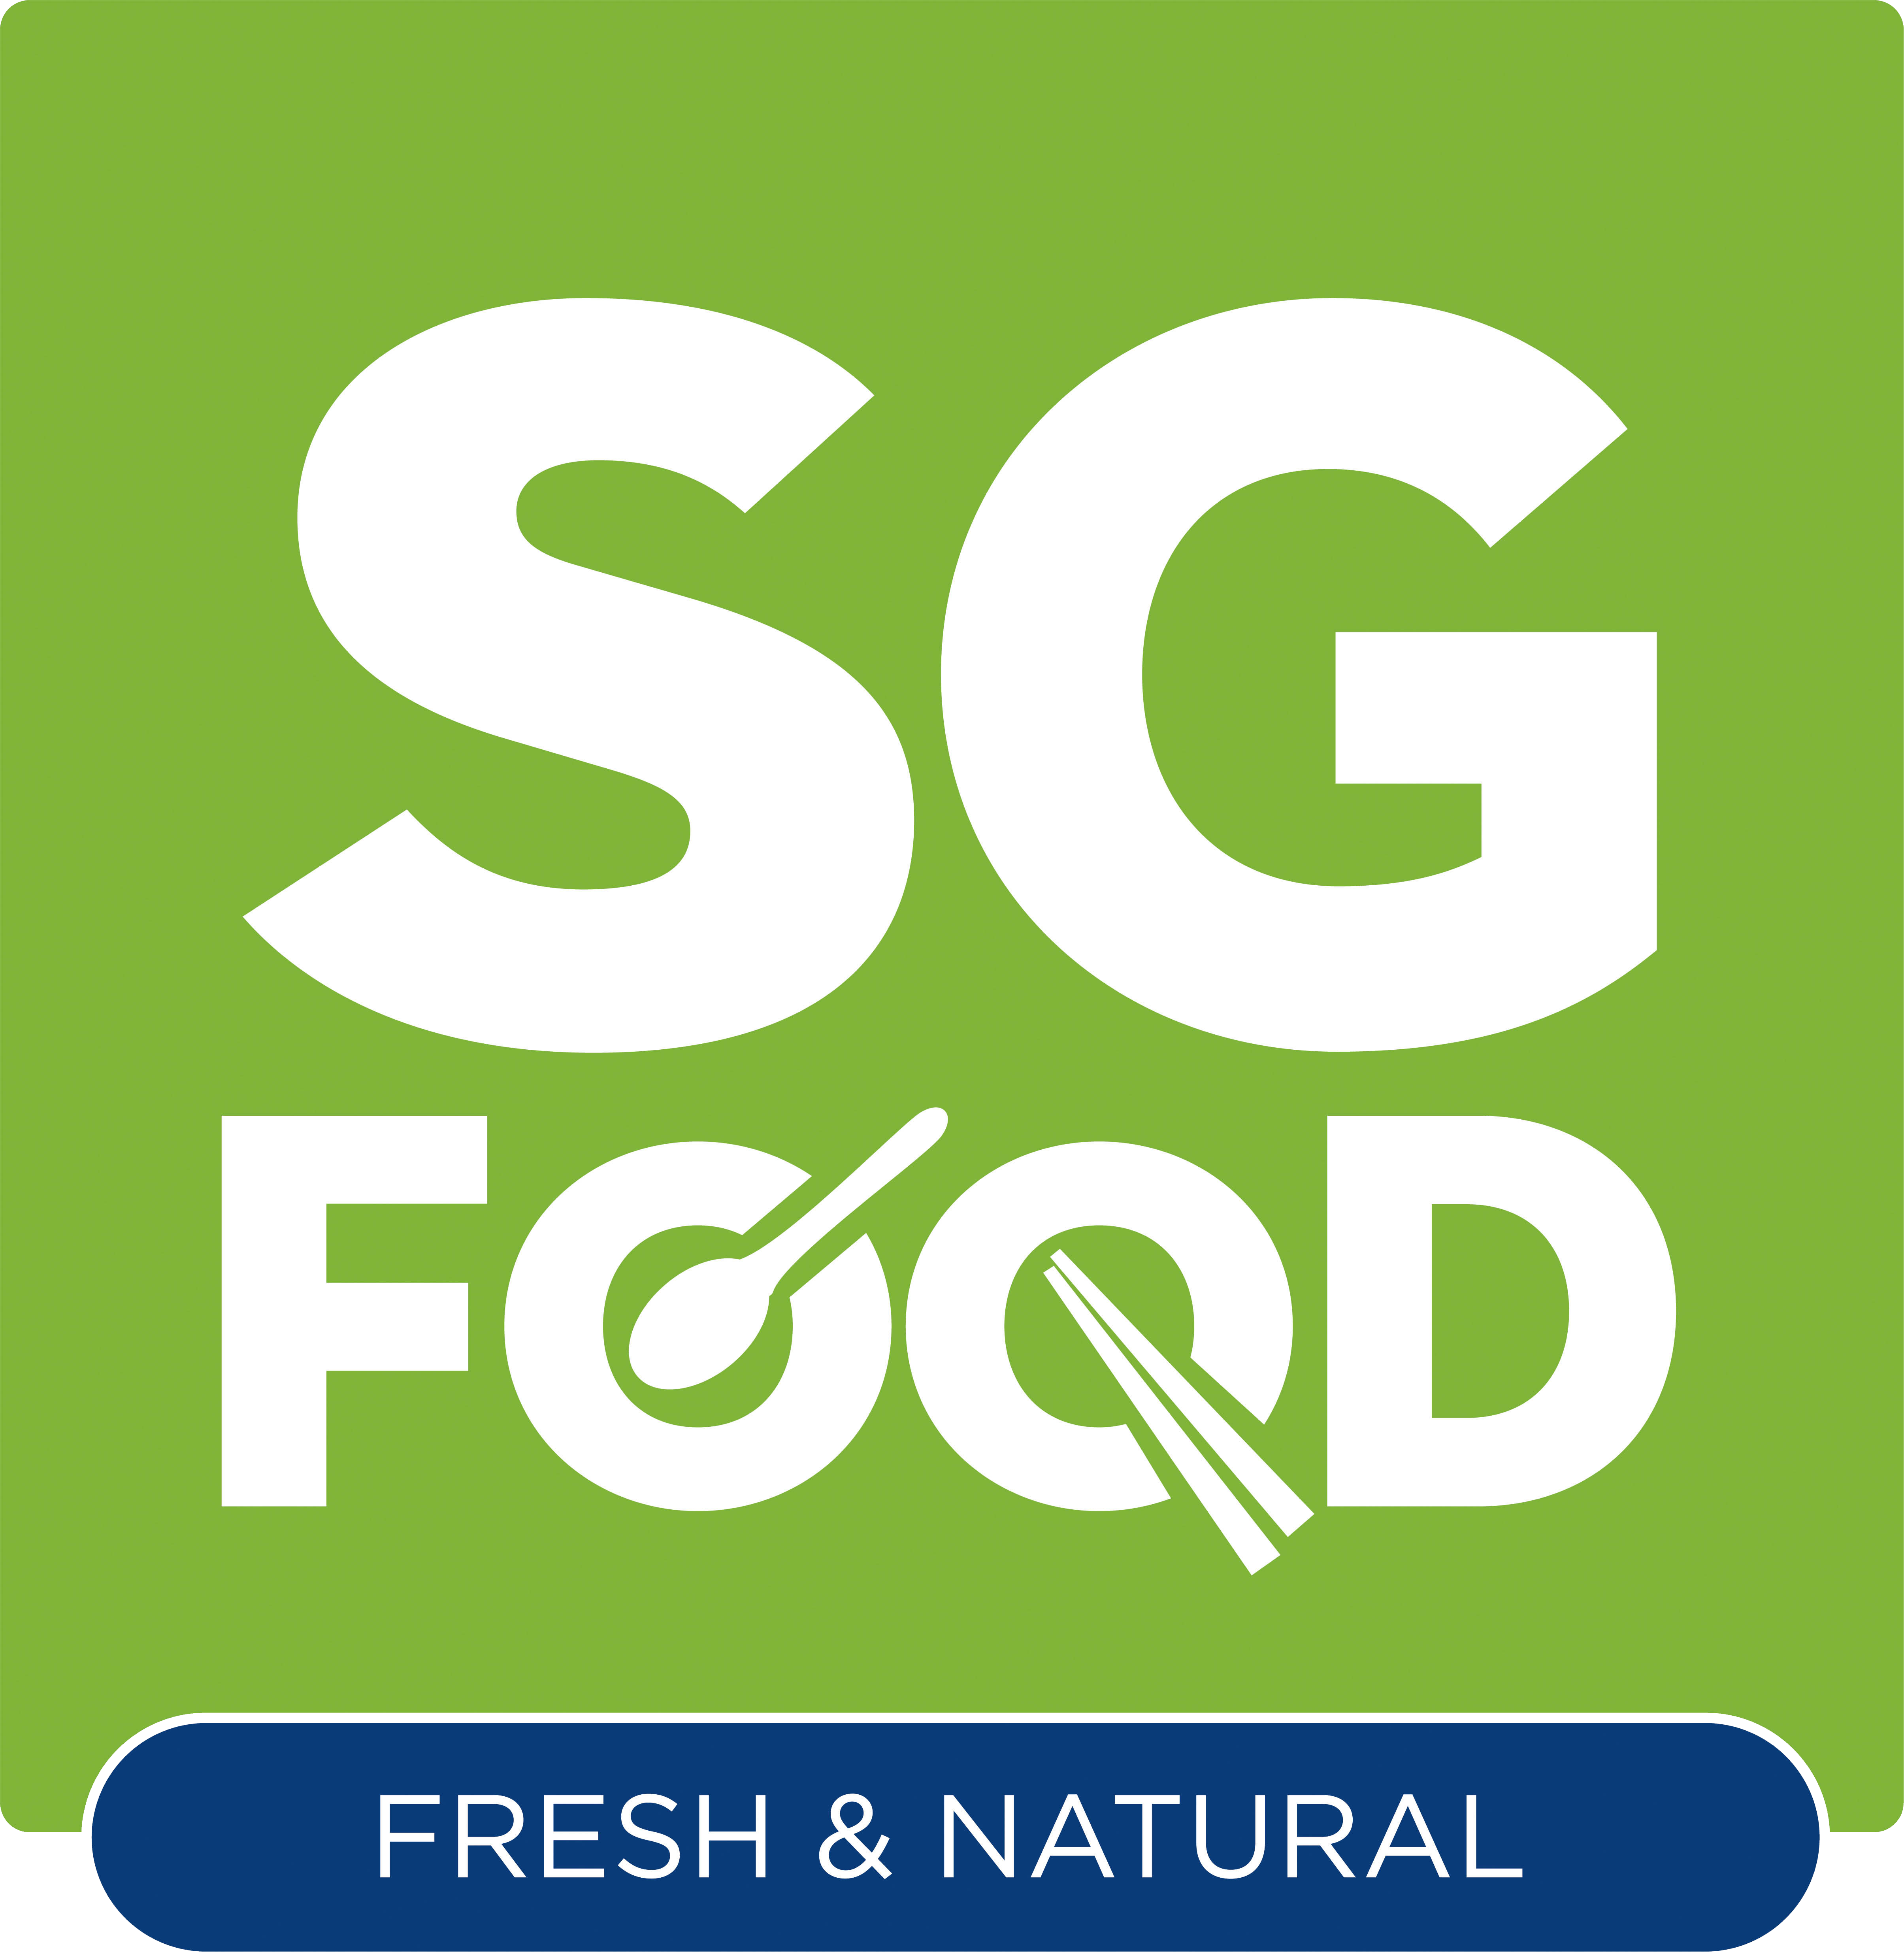 SGF Logo Sai Gon Food